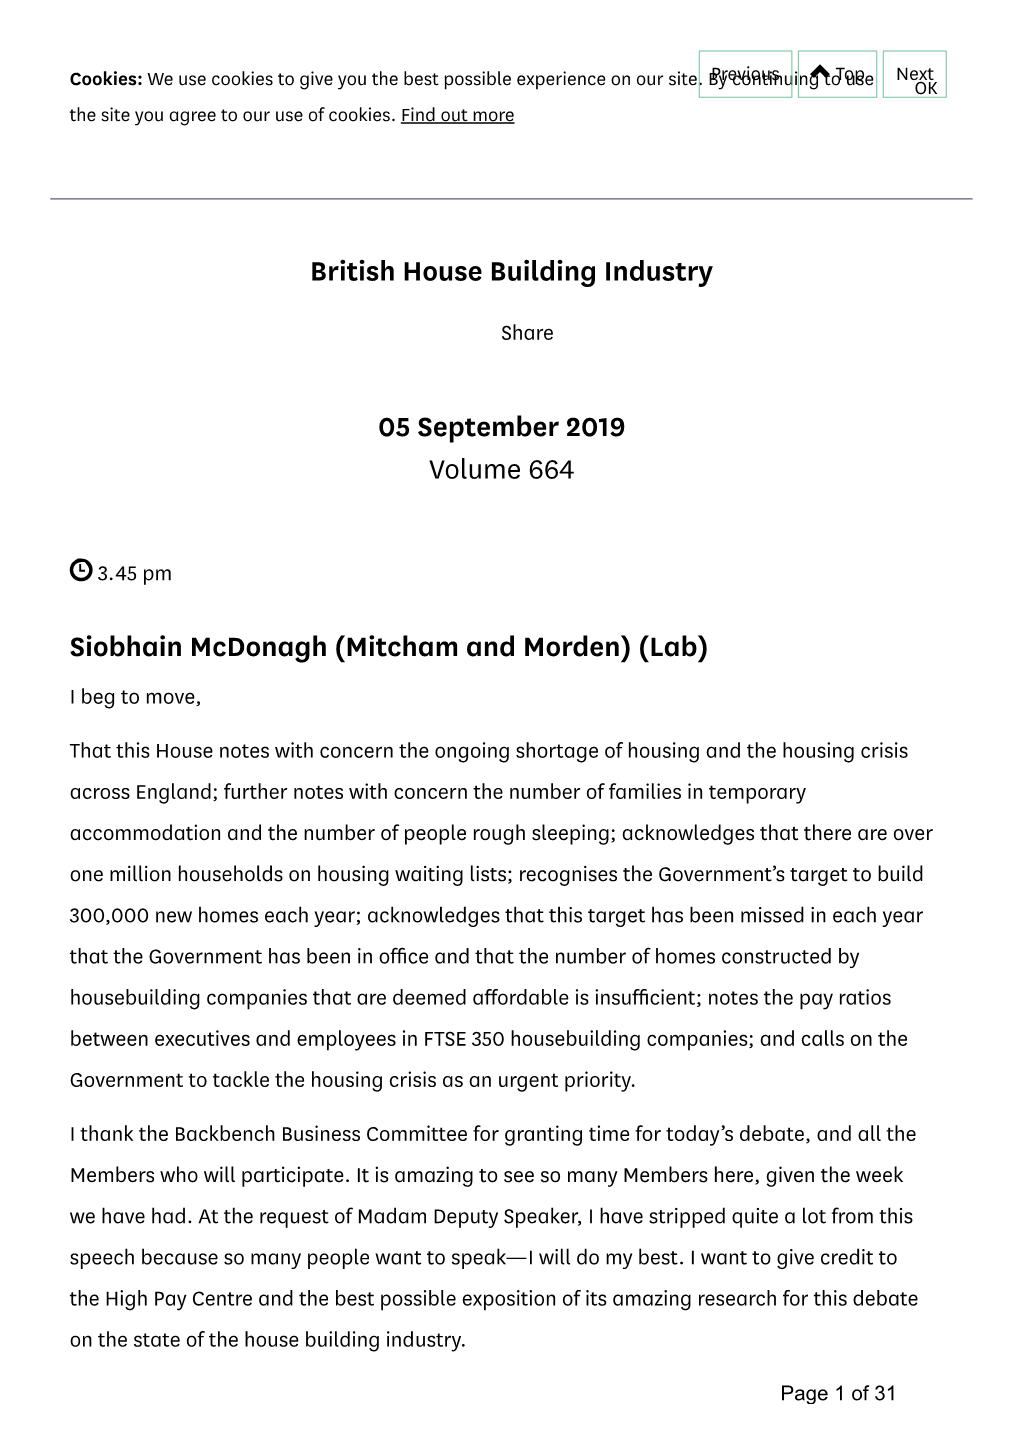 British House Building Industry 05 September 2019 Volume 664